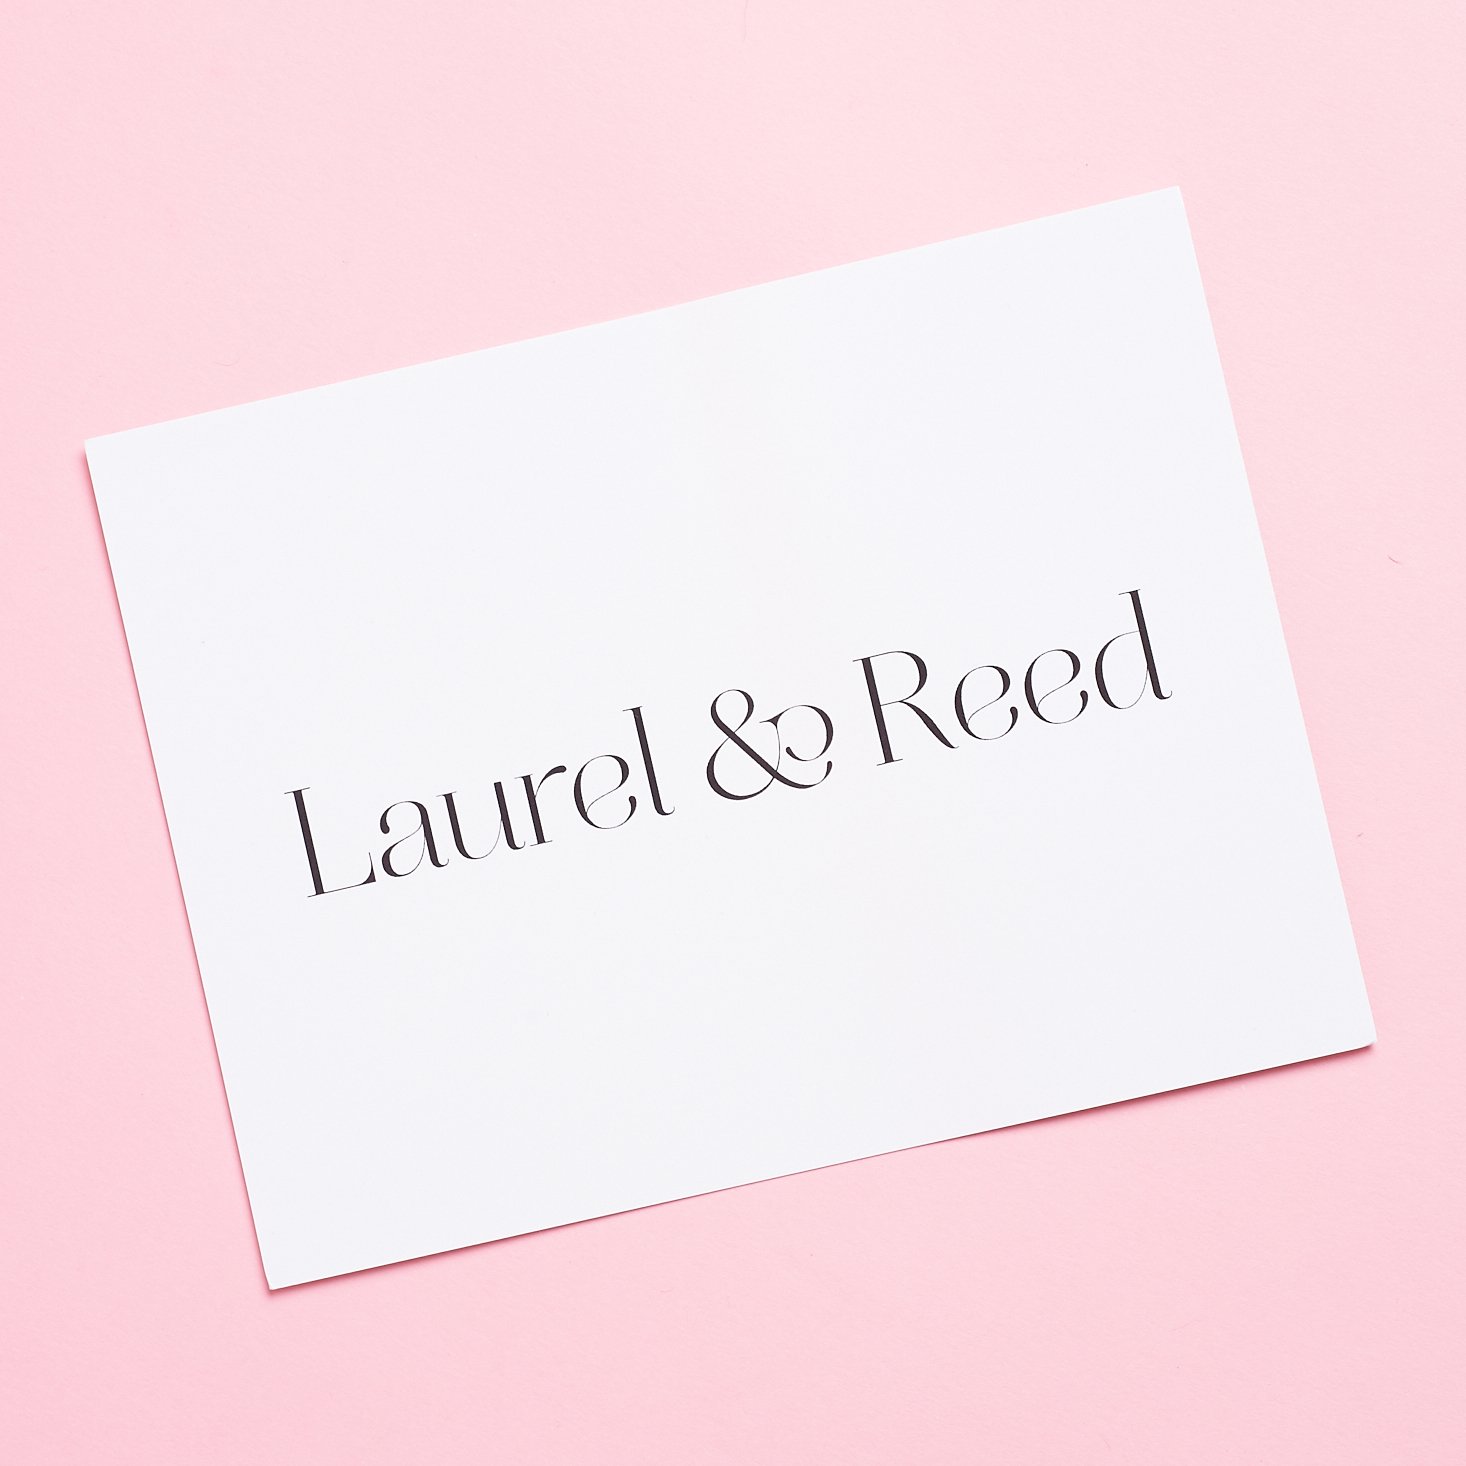 Laurel & Reed brand info card